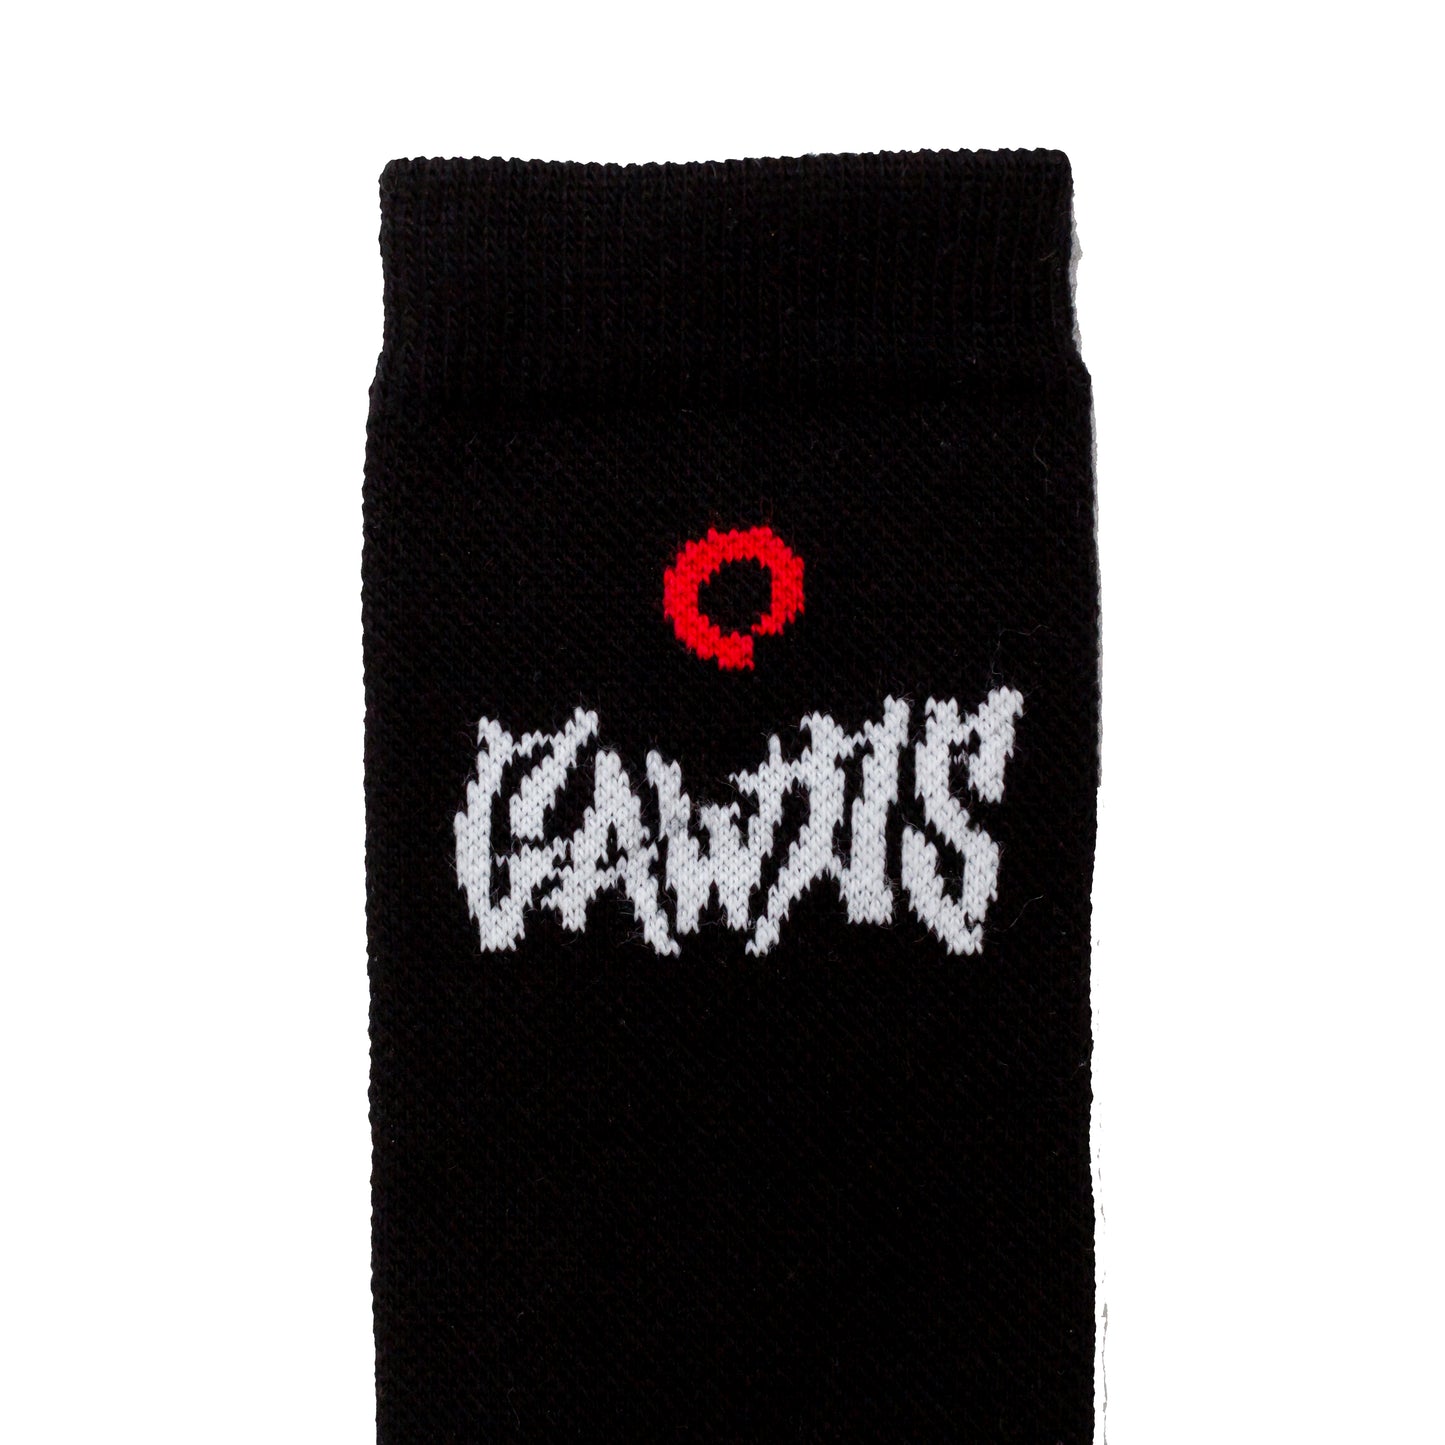 Gawds Brand Socks (1 pr)